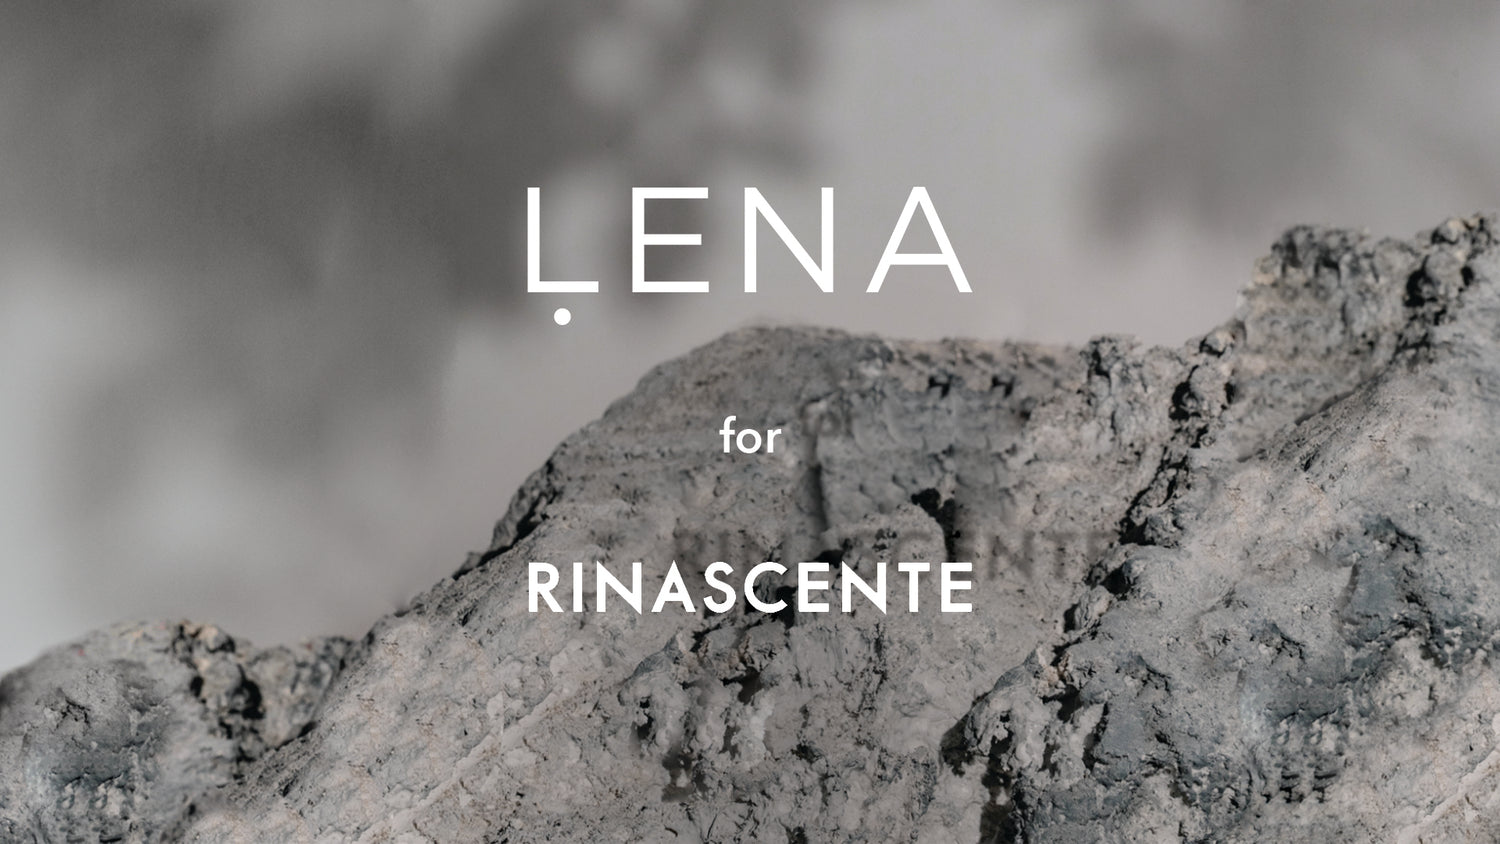 Lena on Tour con Rinascente